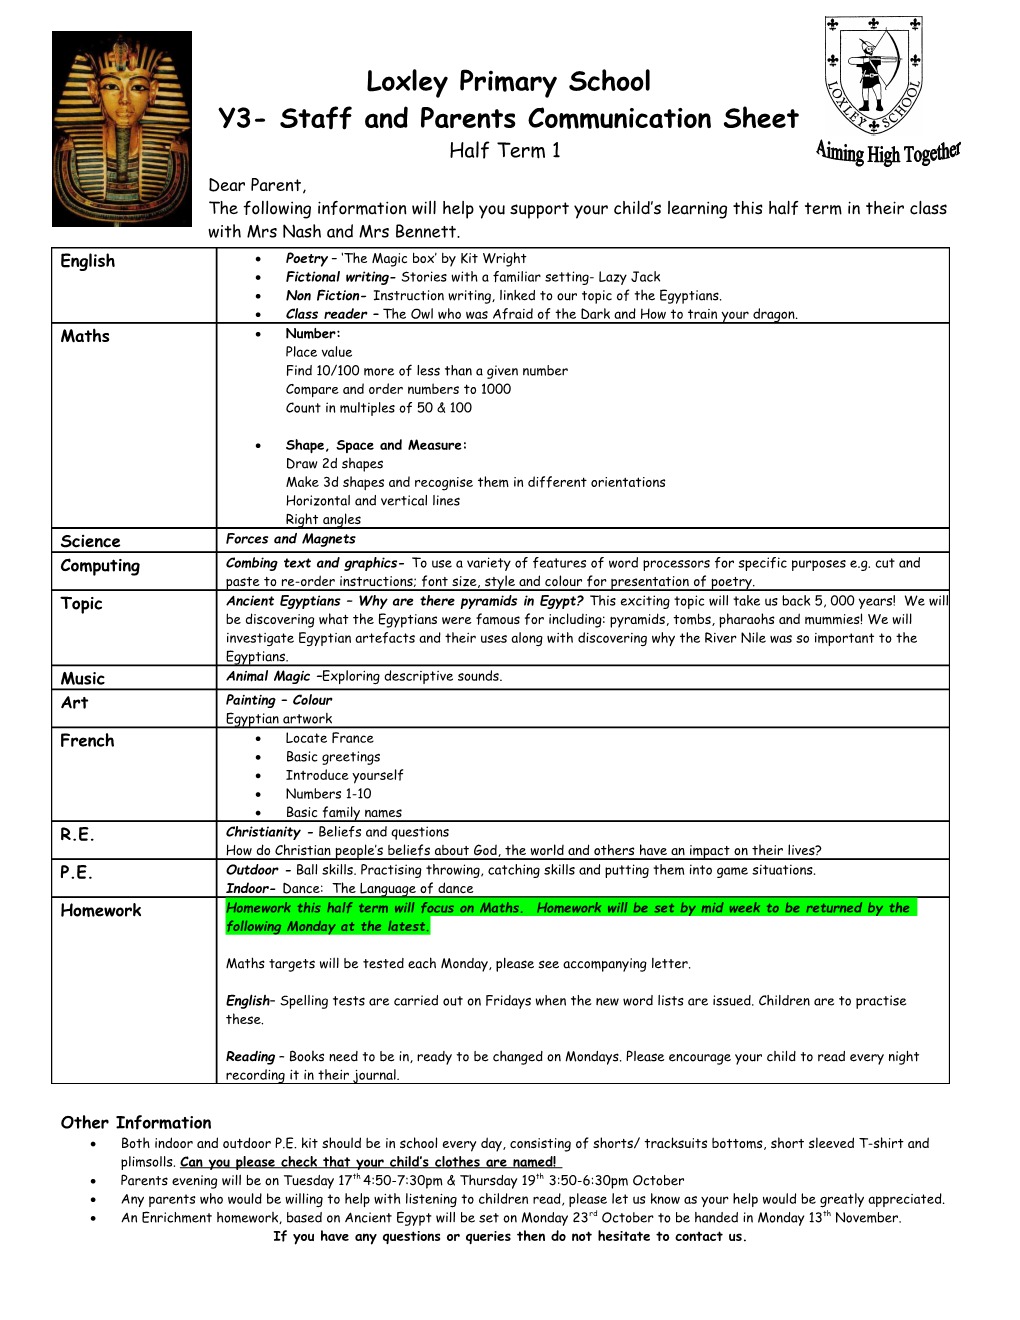 Loxley School Staff / Parents Communication Sheet